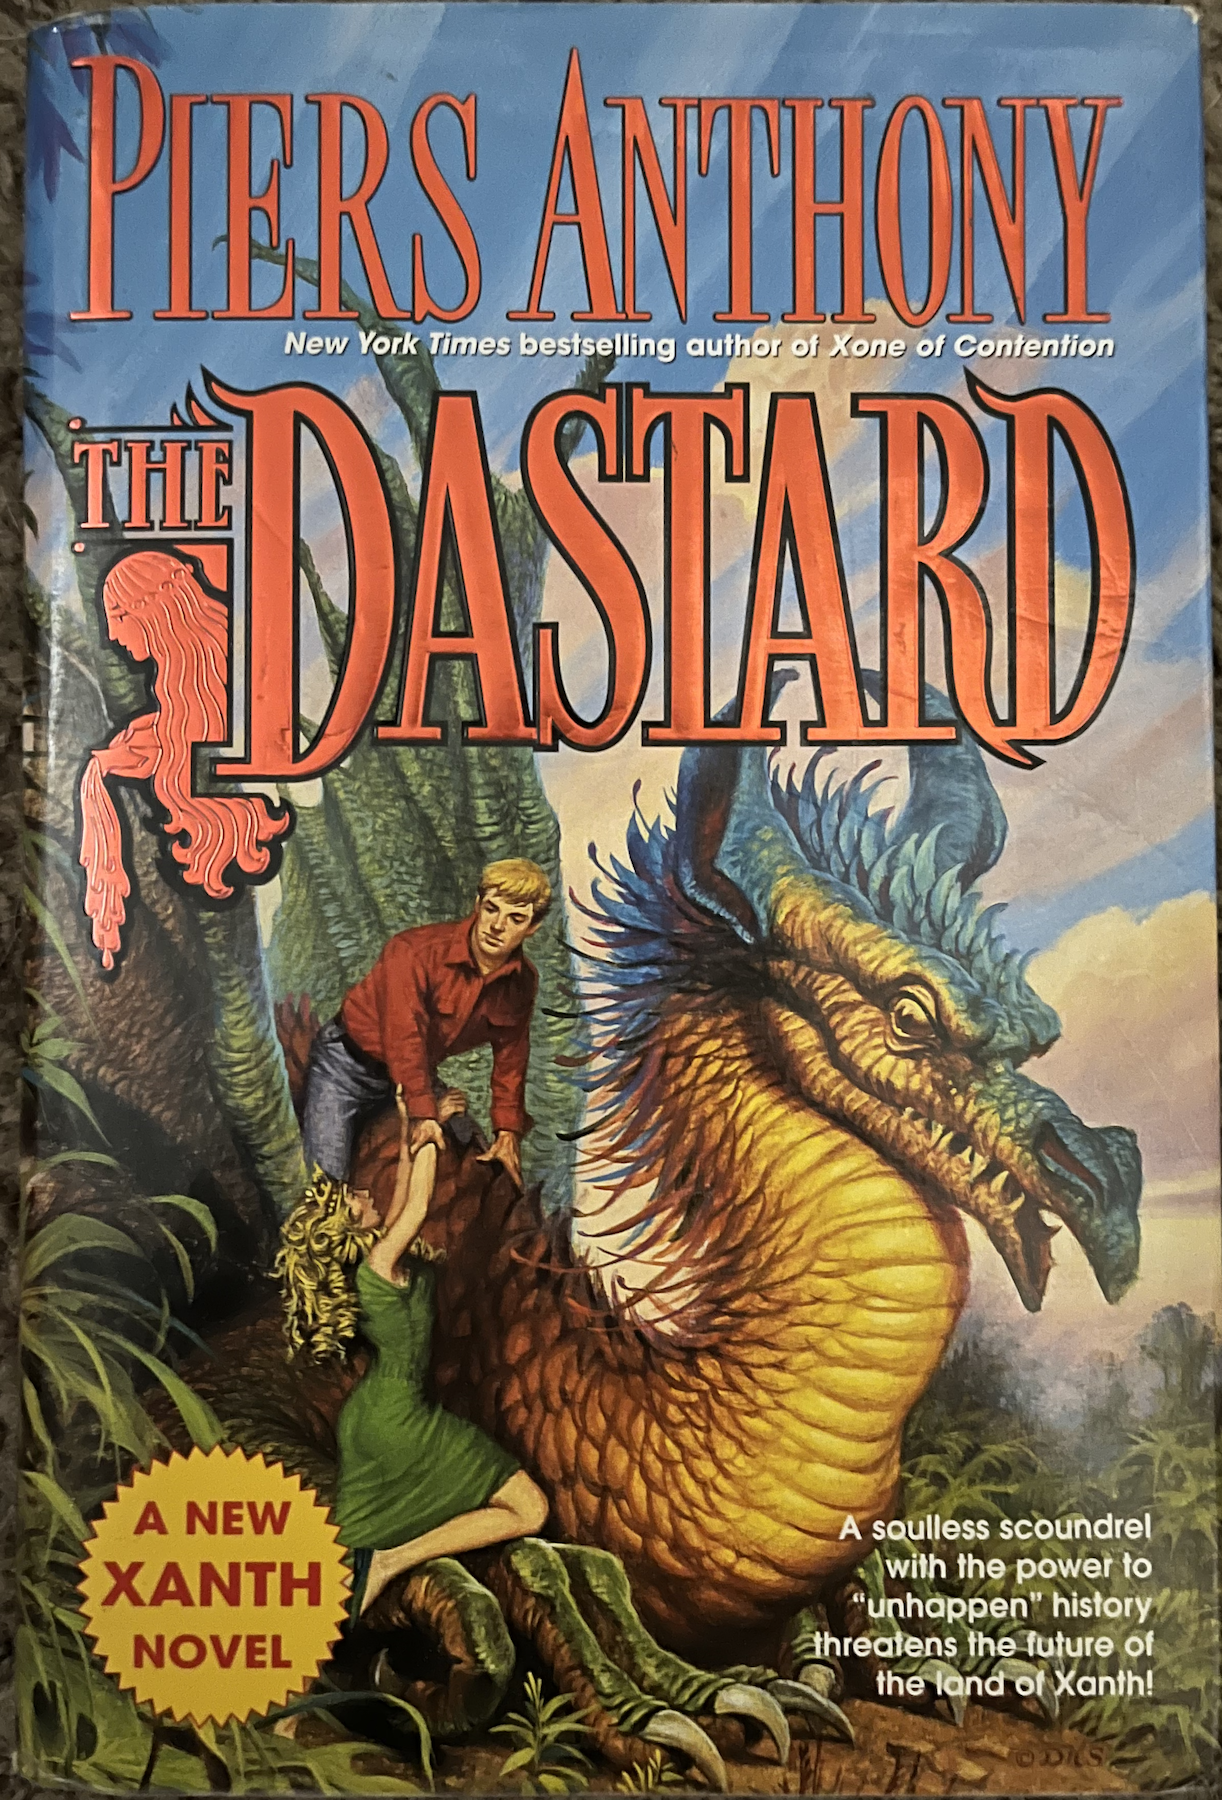 The Dastard hardback cover